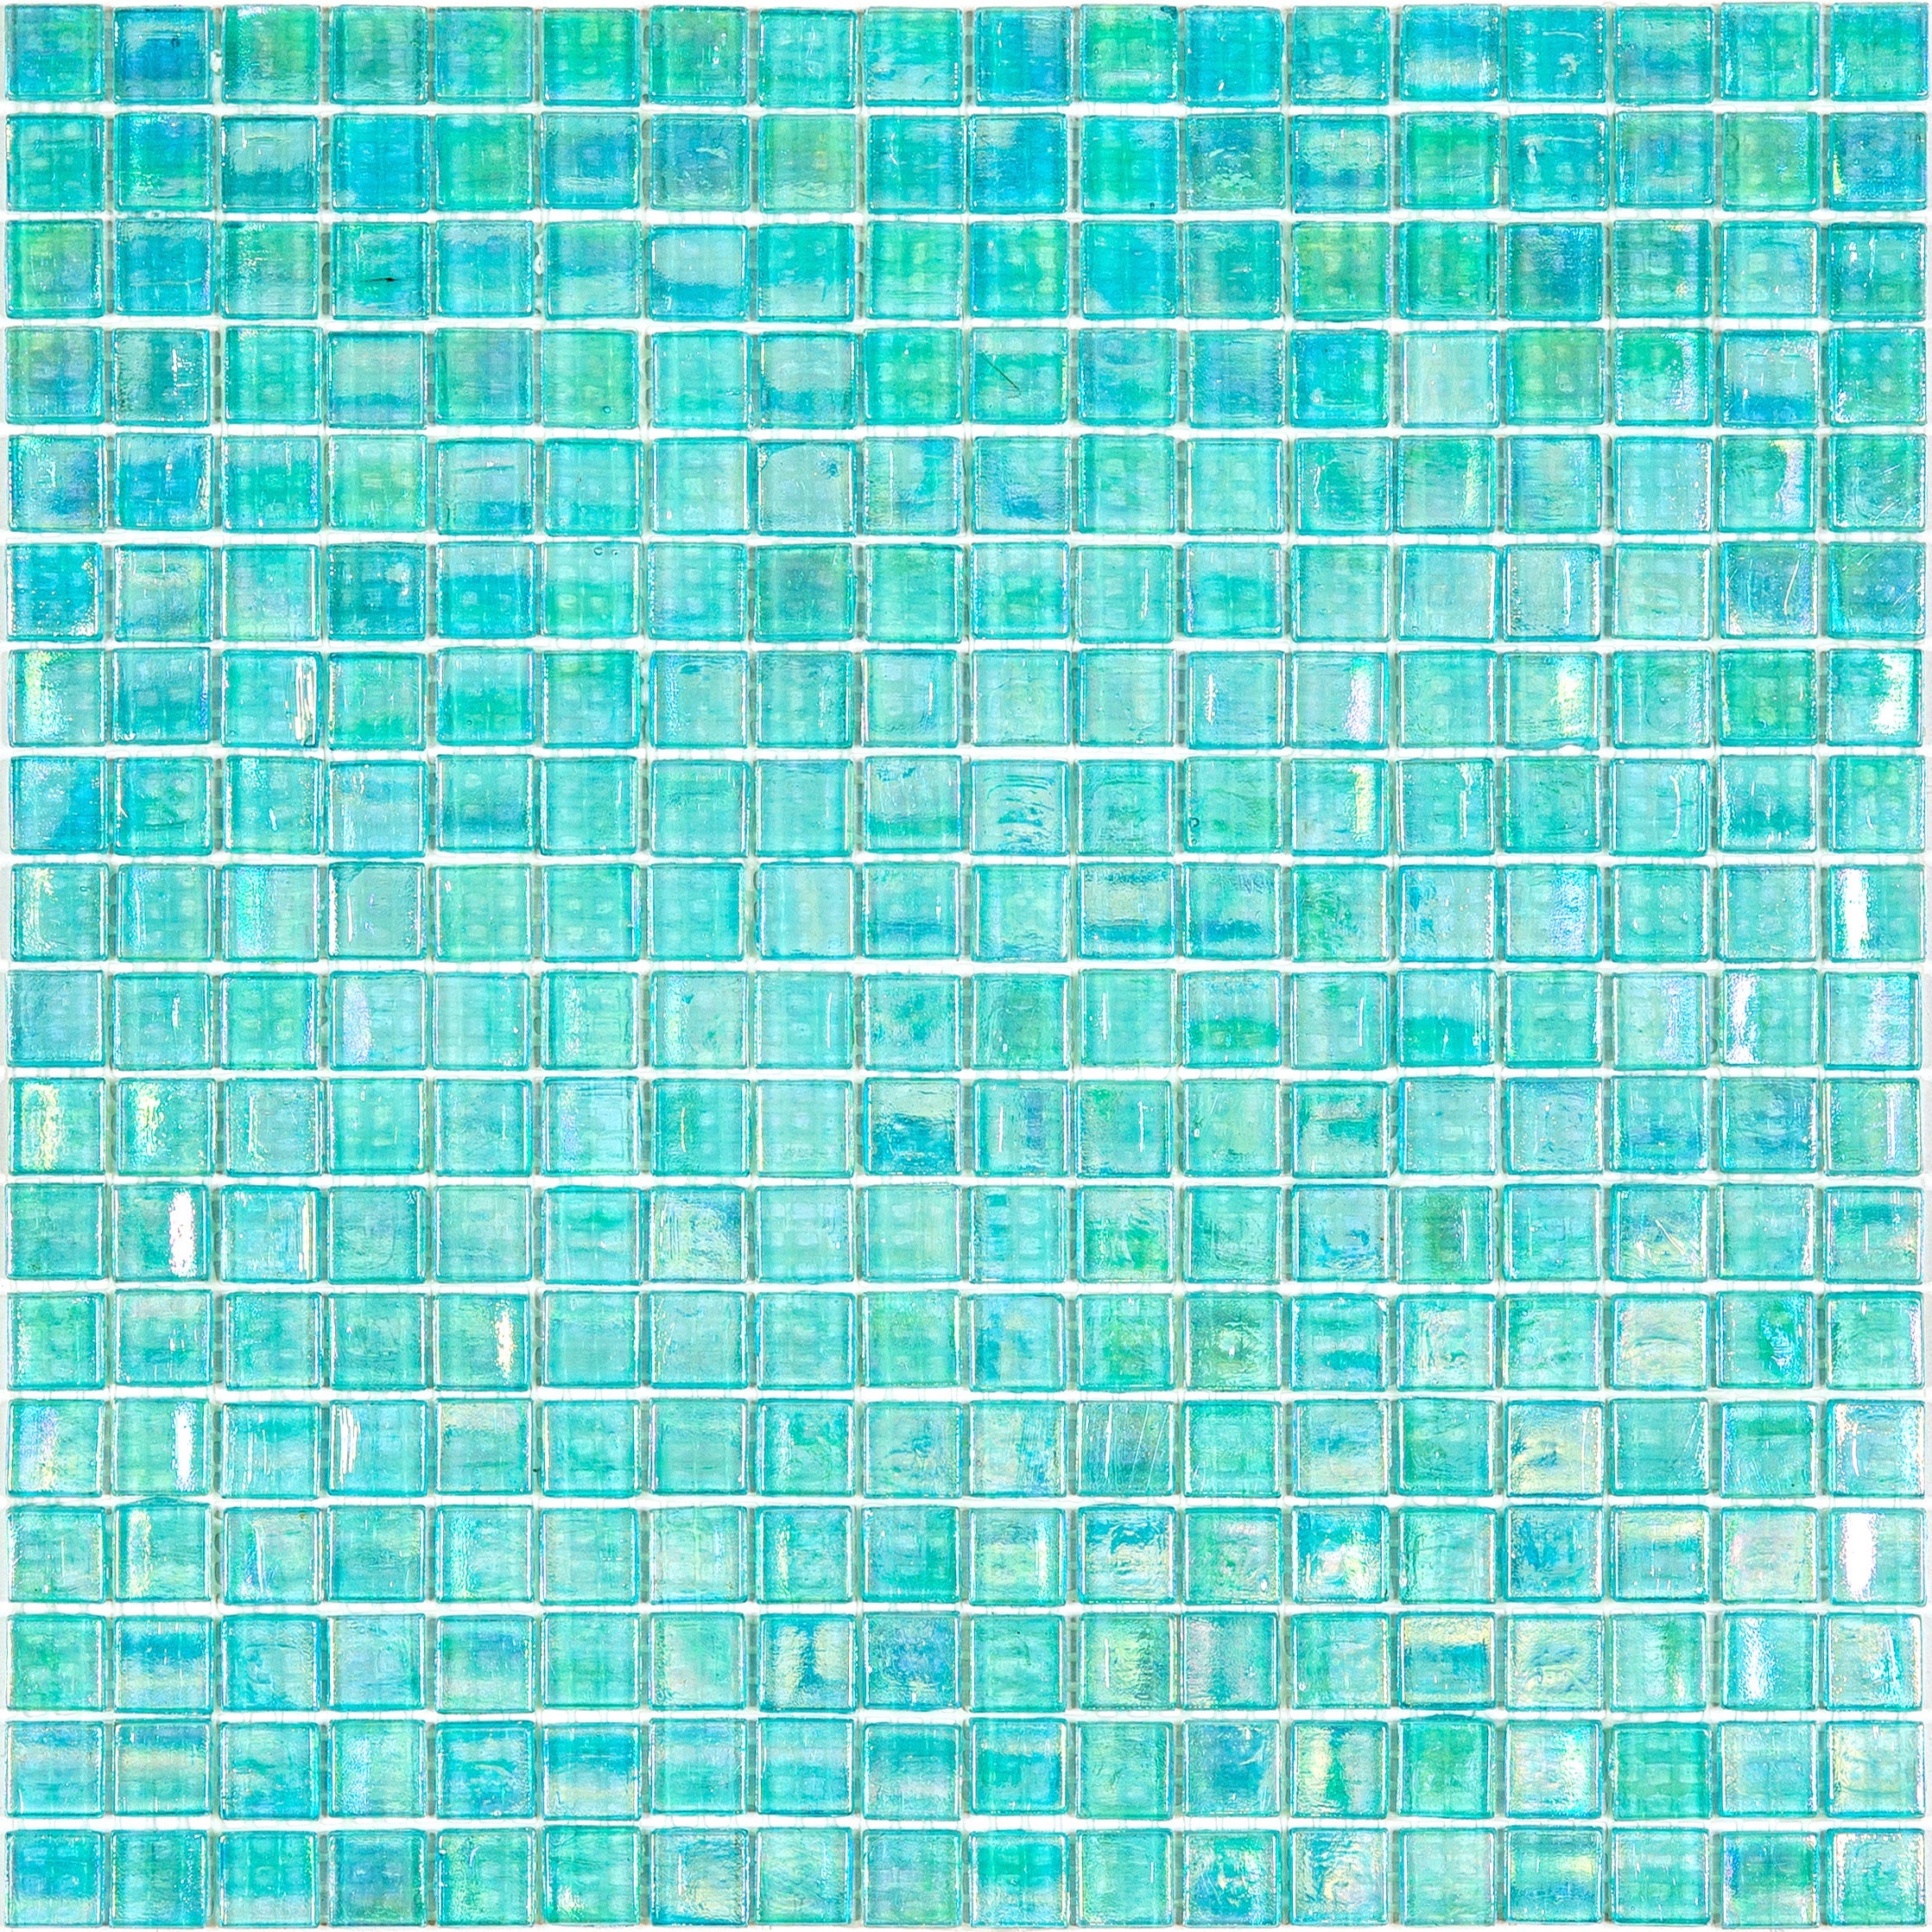 mir alma solid colors 0_6 inch nibble ng14 wall and floor mosaic distributed by surface group natural materials